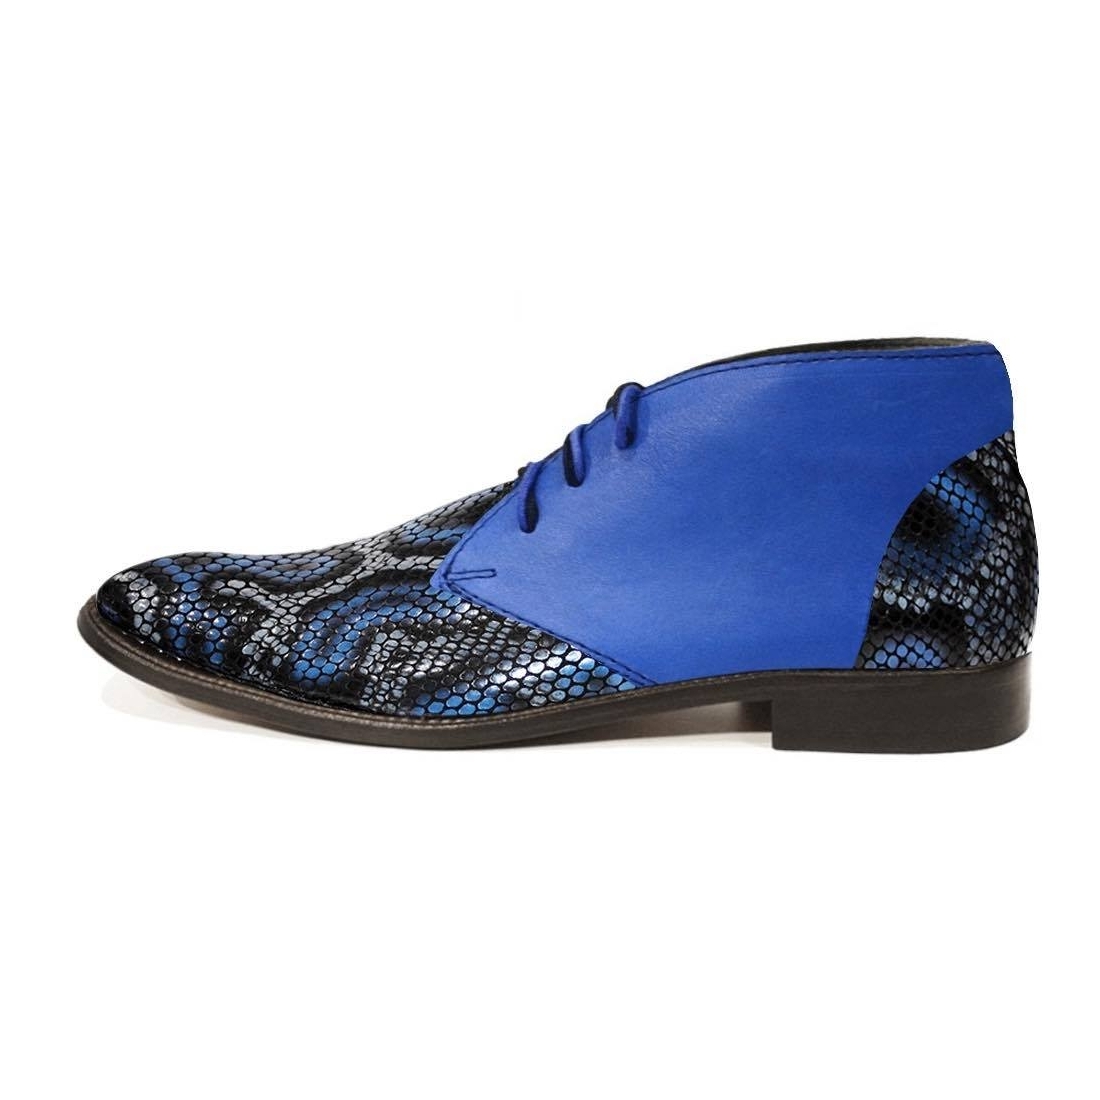 Modello Serpentto - Desert Boots - Handmade Colorful Italian Leather Shoes